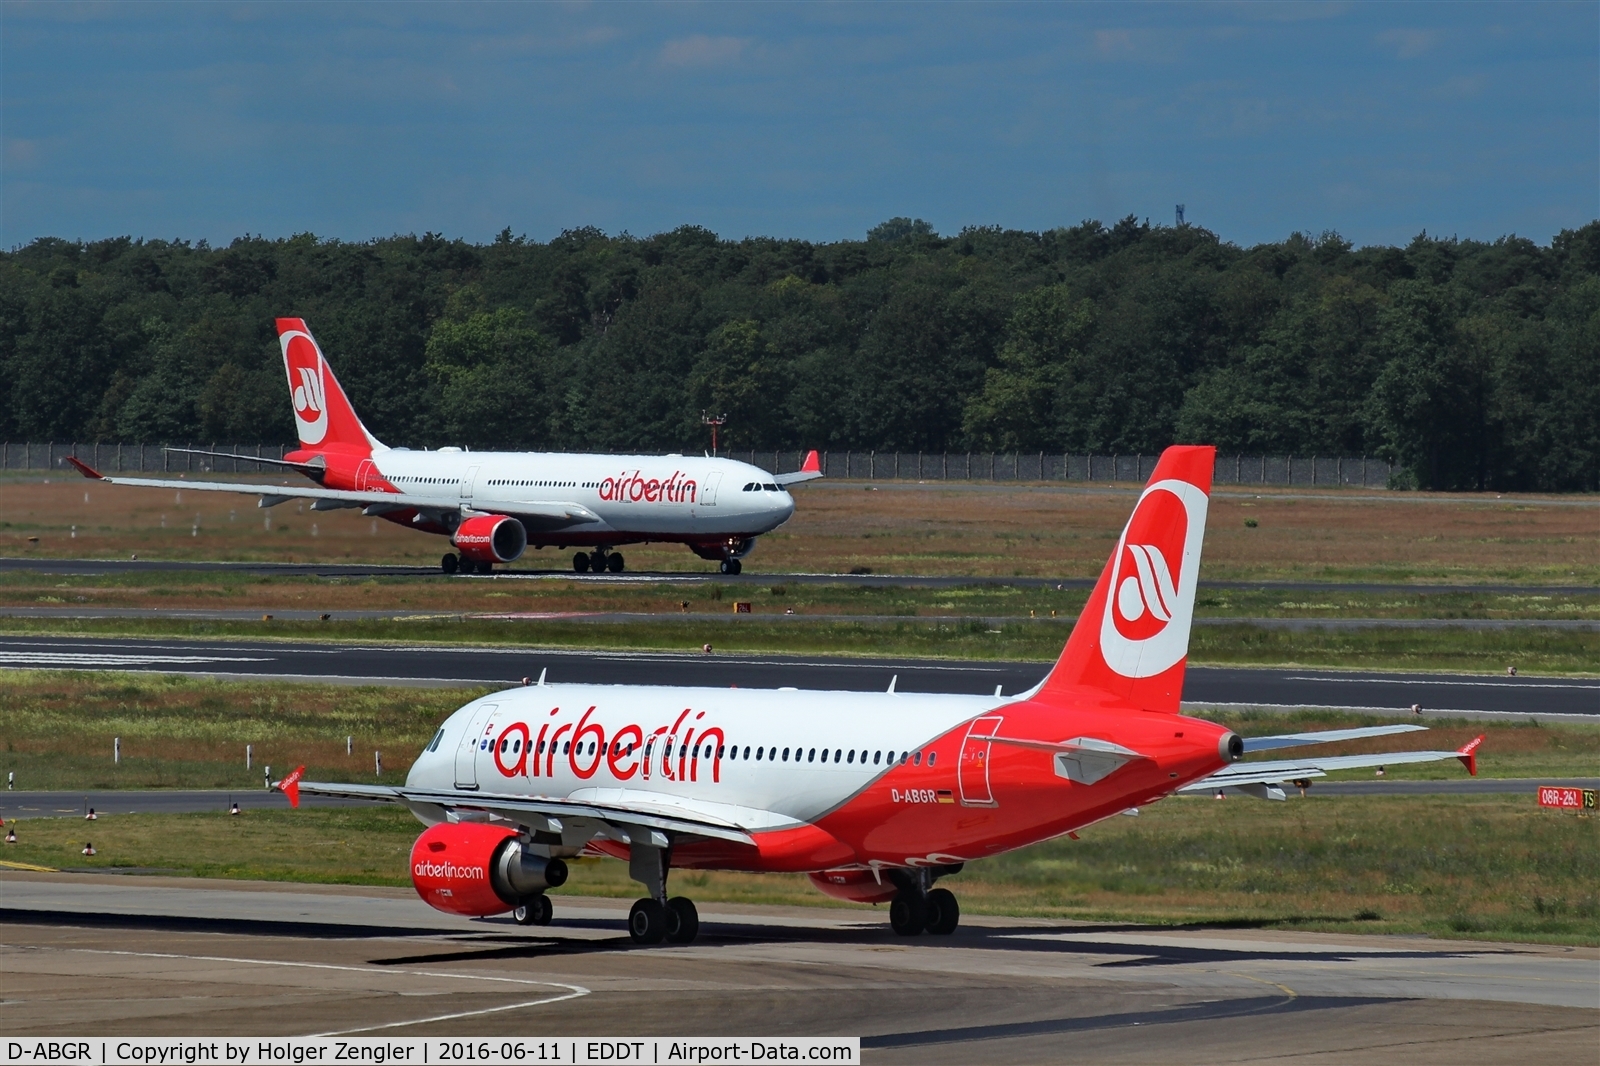 D-ABGR, 2008 Airbus A319-112 C/N 3704, TXL waving good bye tour no.4 since 2011